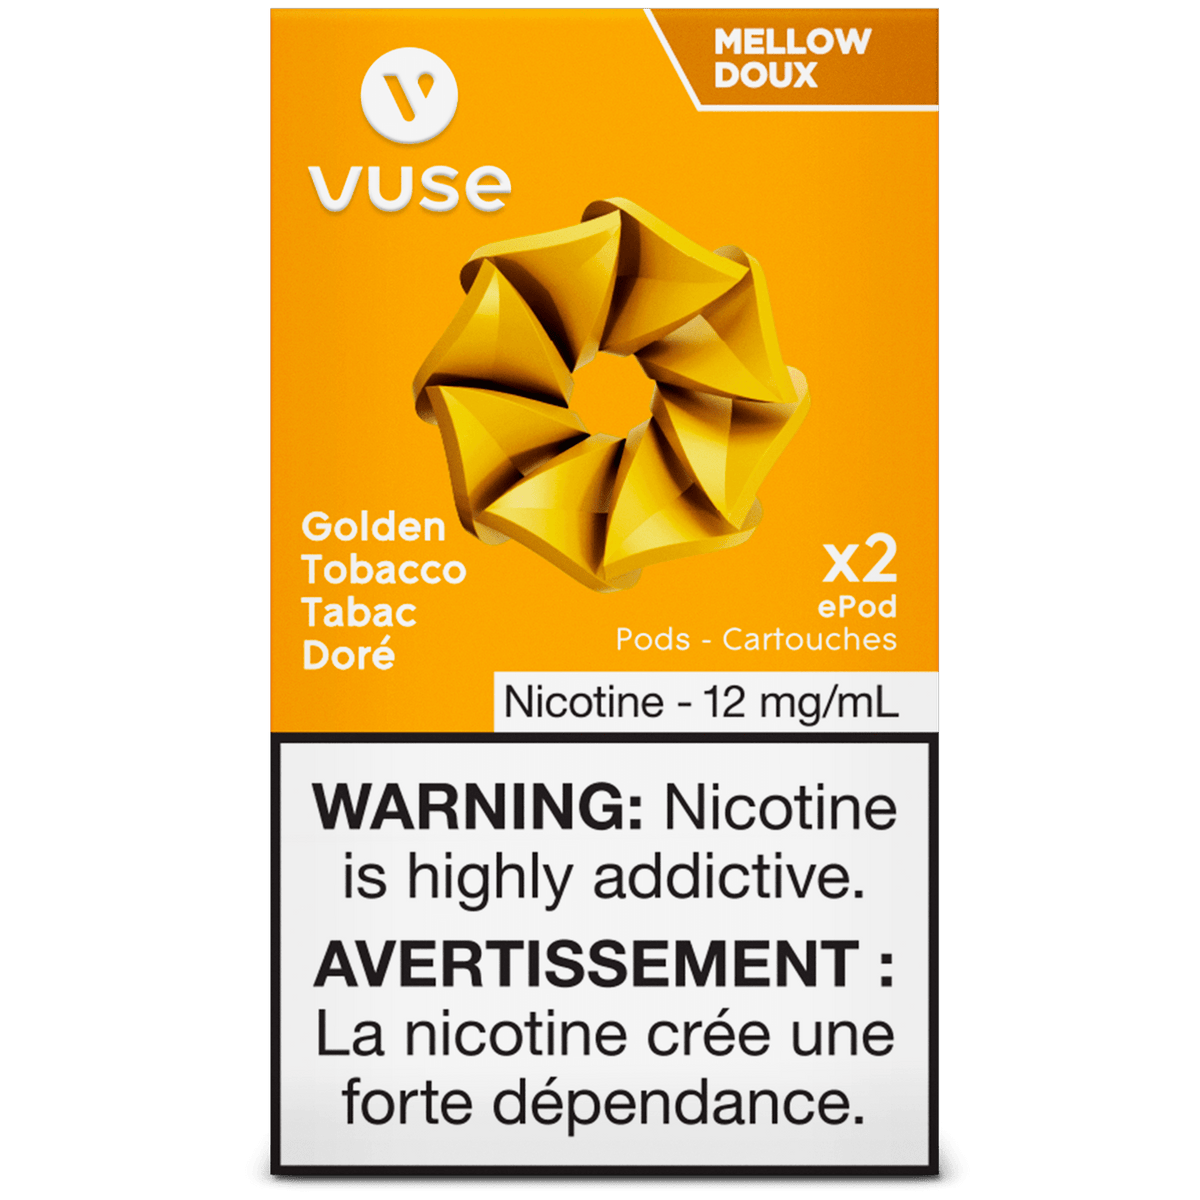 Vuse Alto ePods - Golden Tobacco (2/PK) available on Canada online vape shop